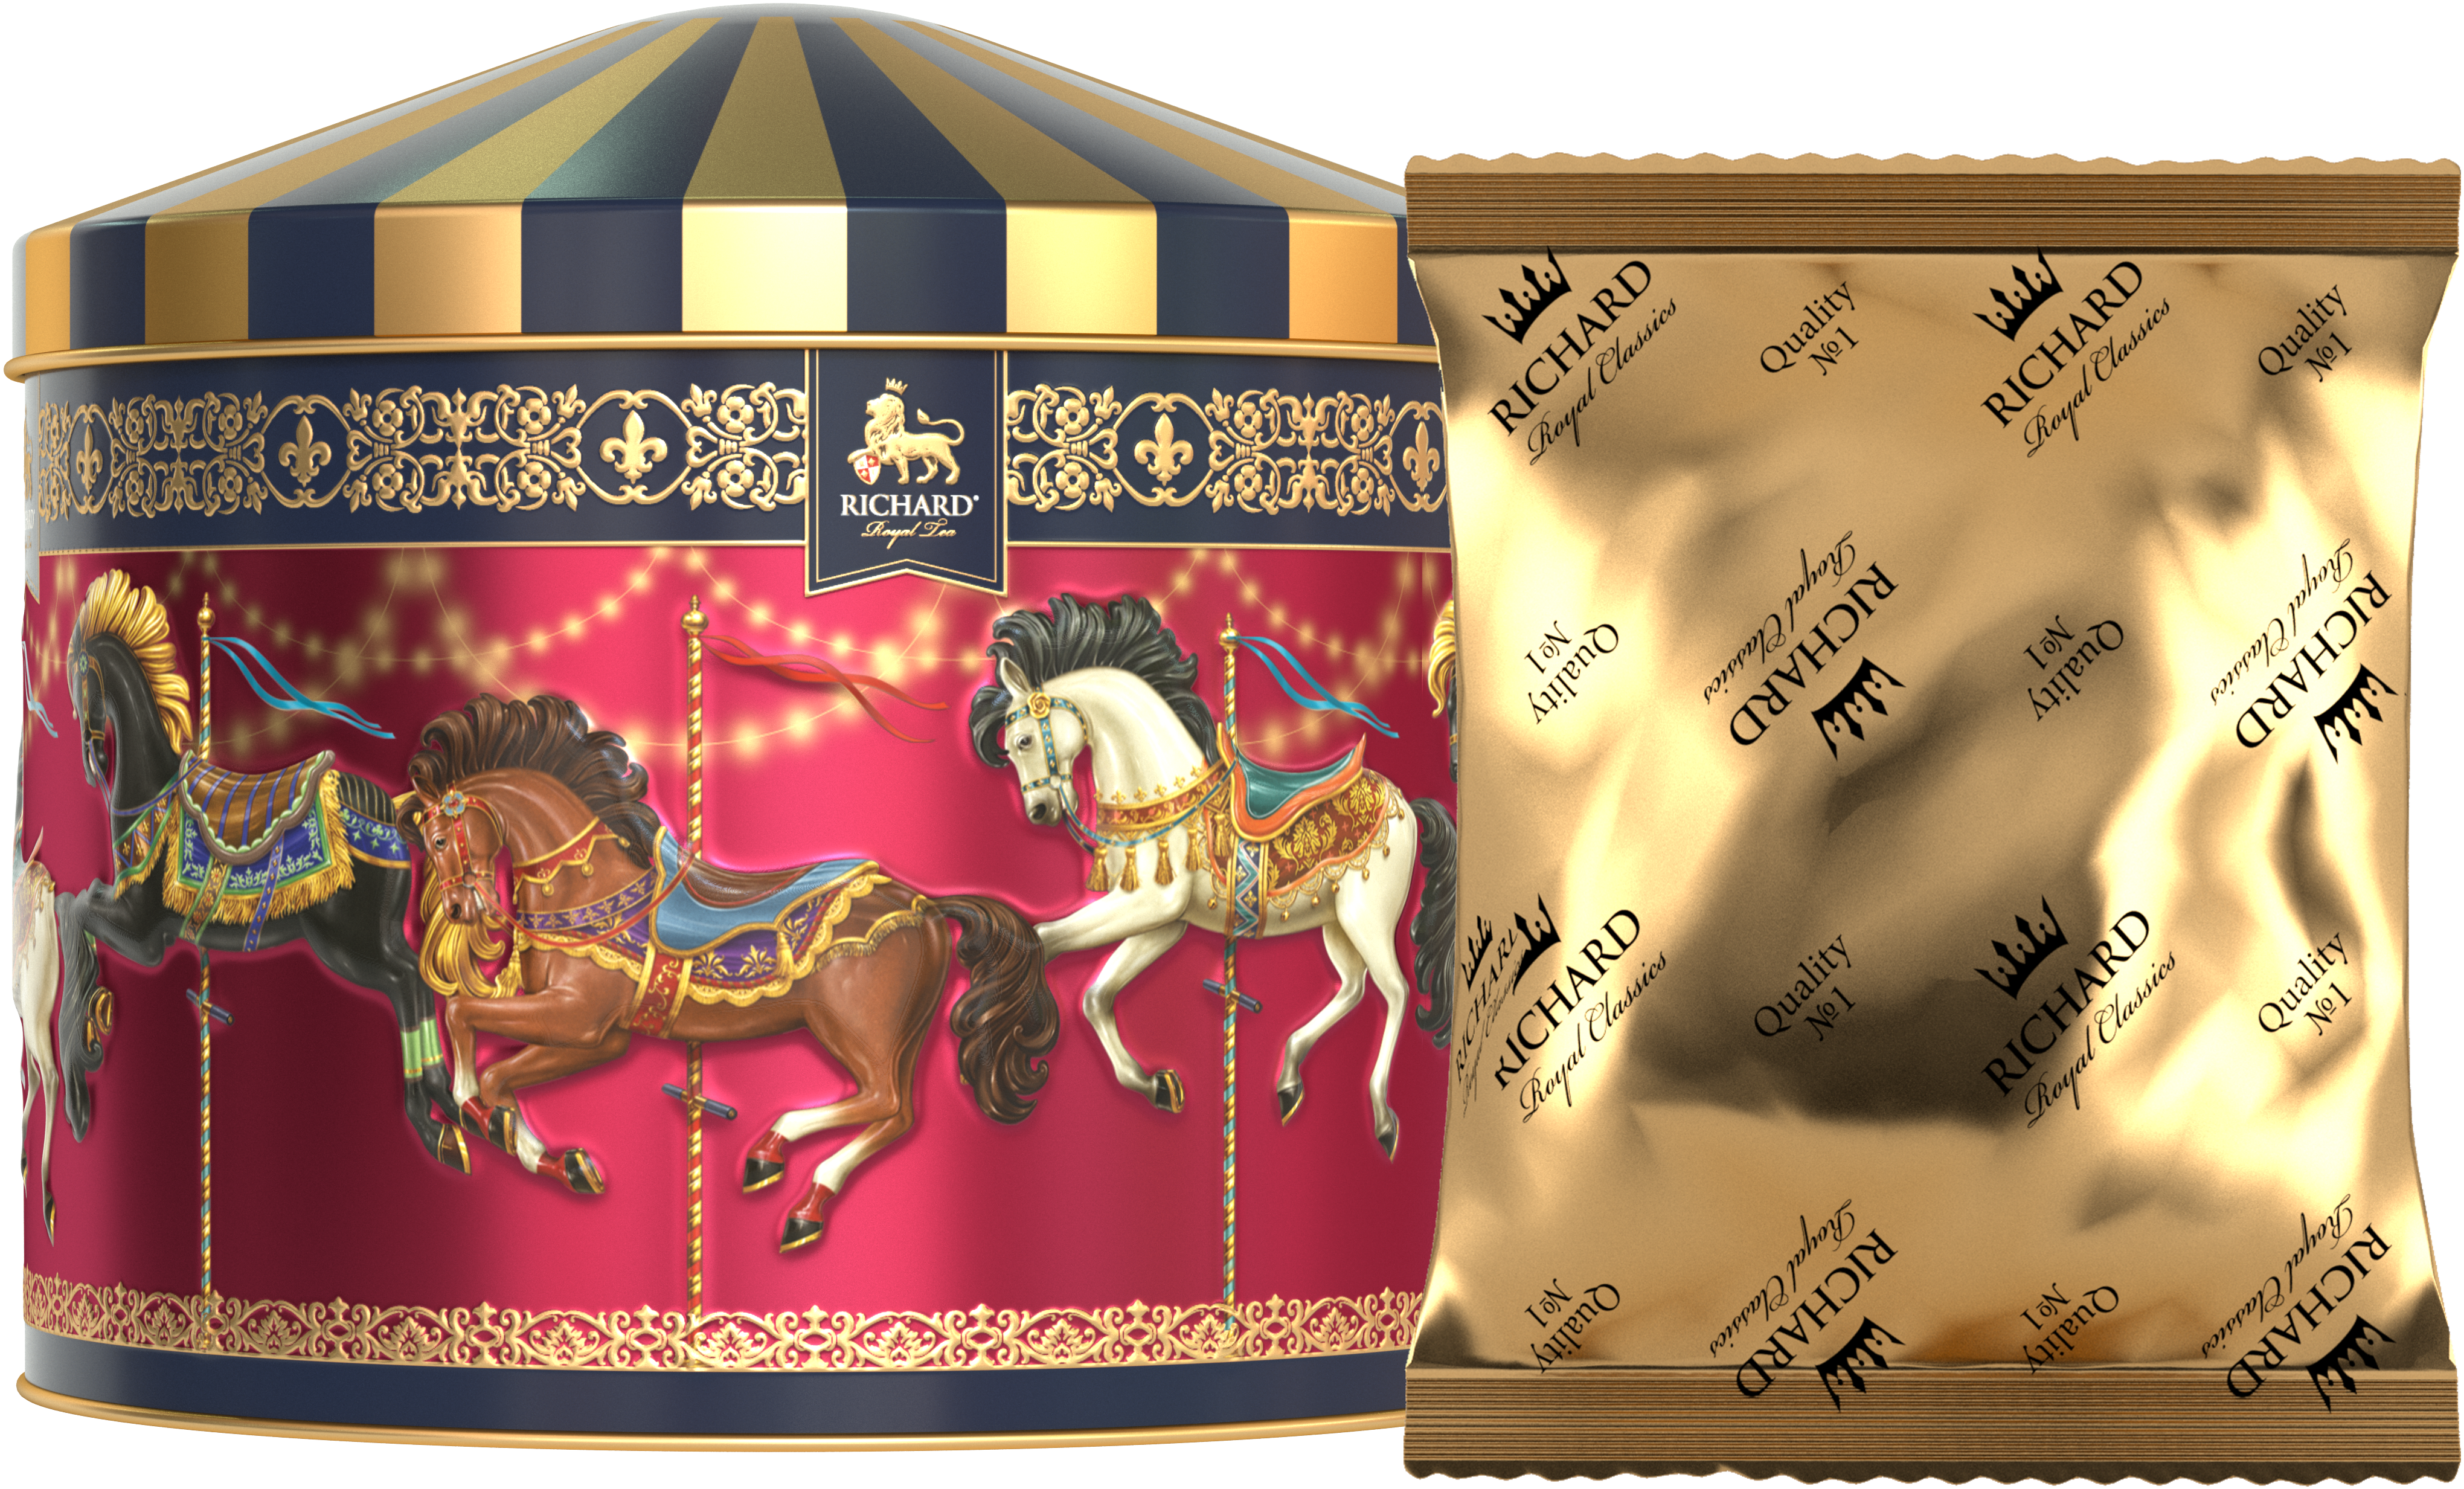 RICHARD Royal Merry-GO-ROUND - Crni čaj, 100g rinfuz, RED metalna kutija